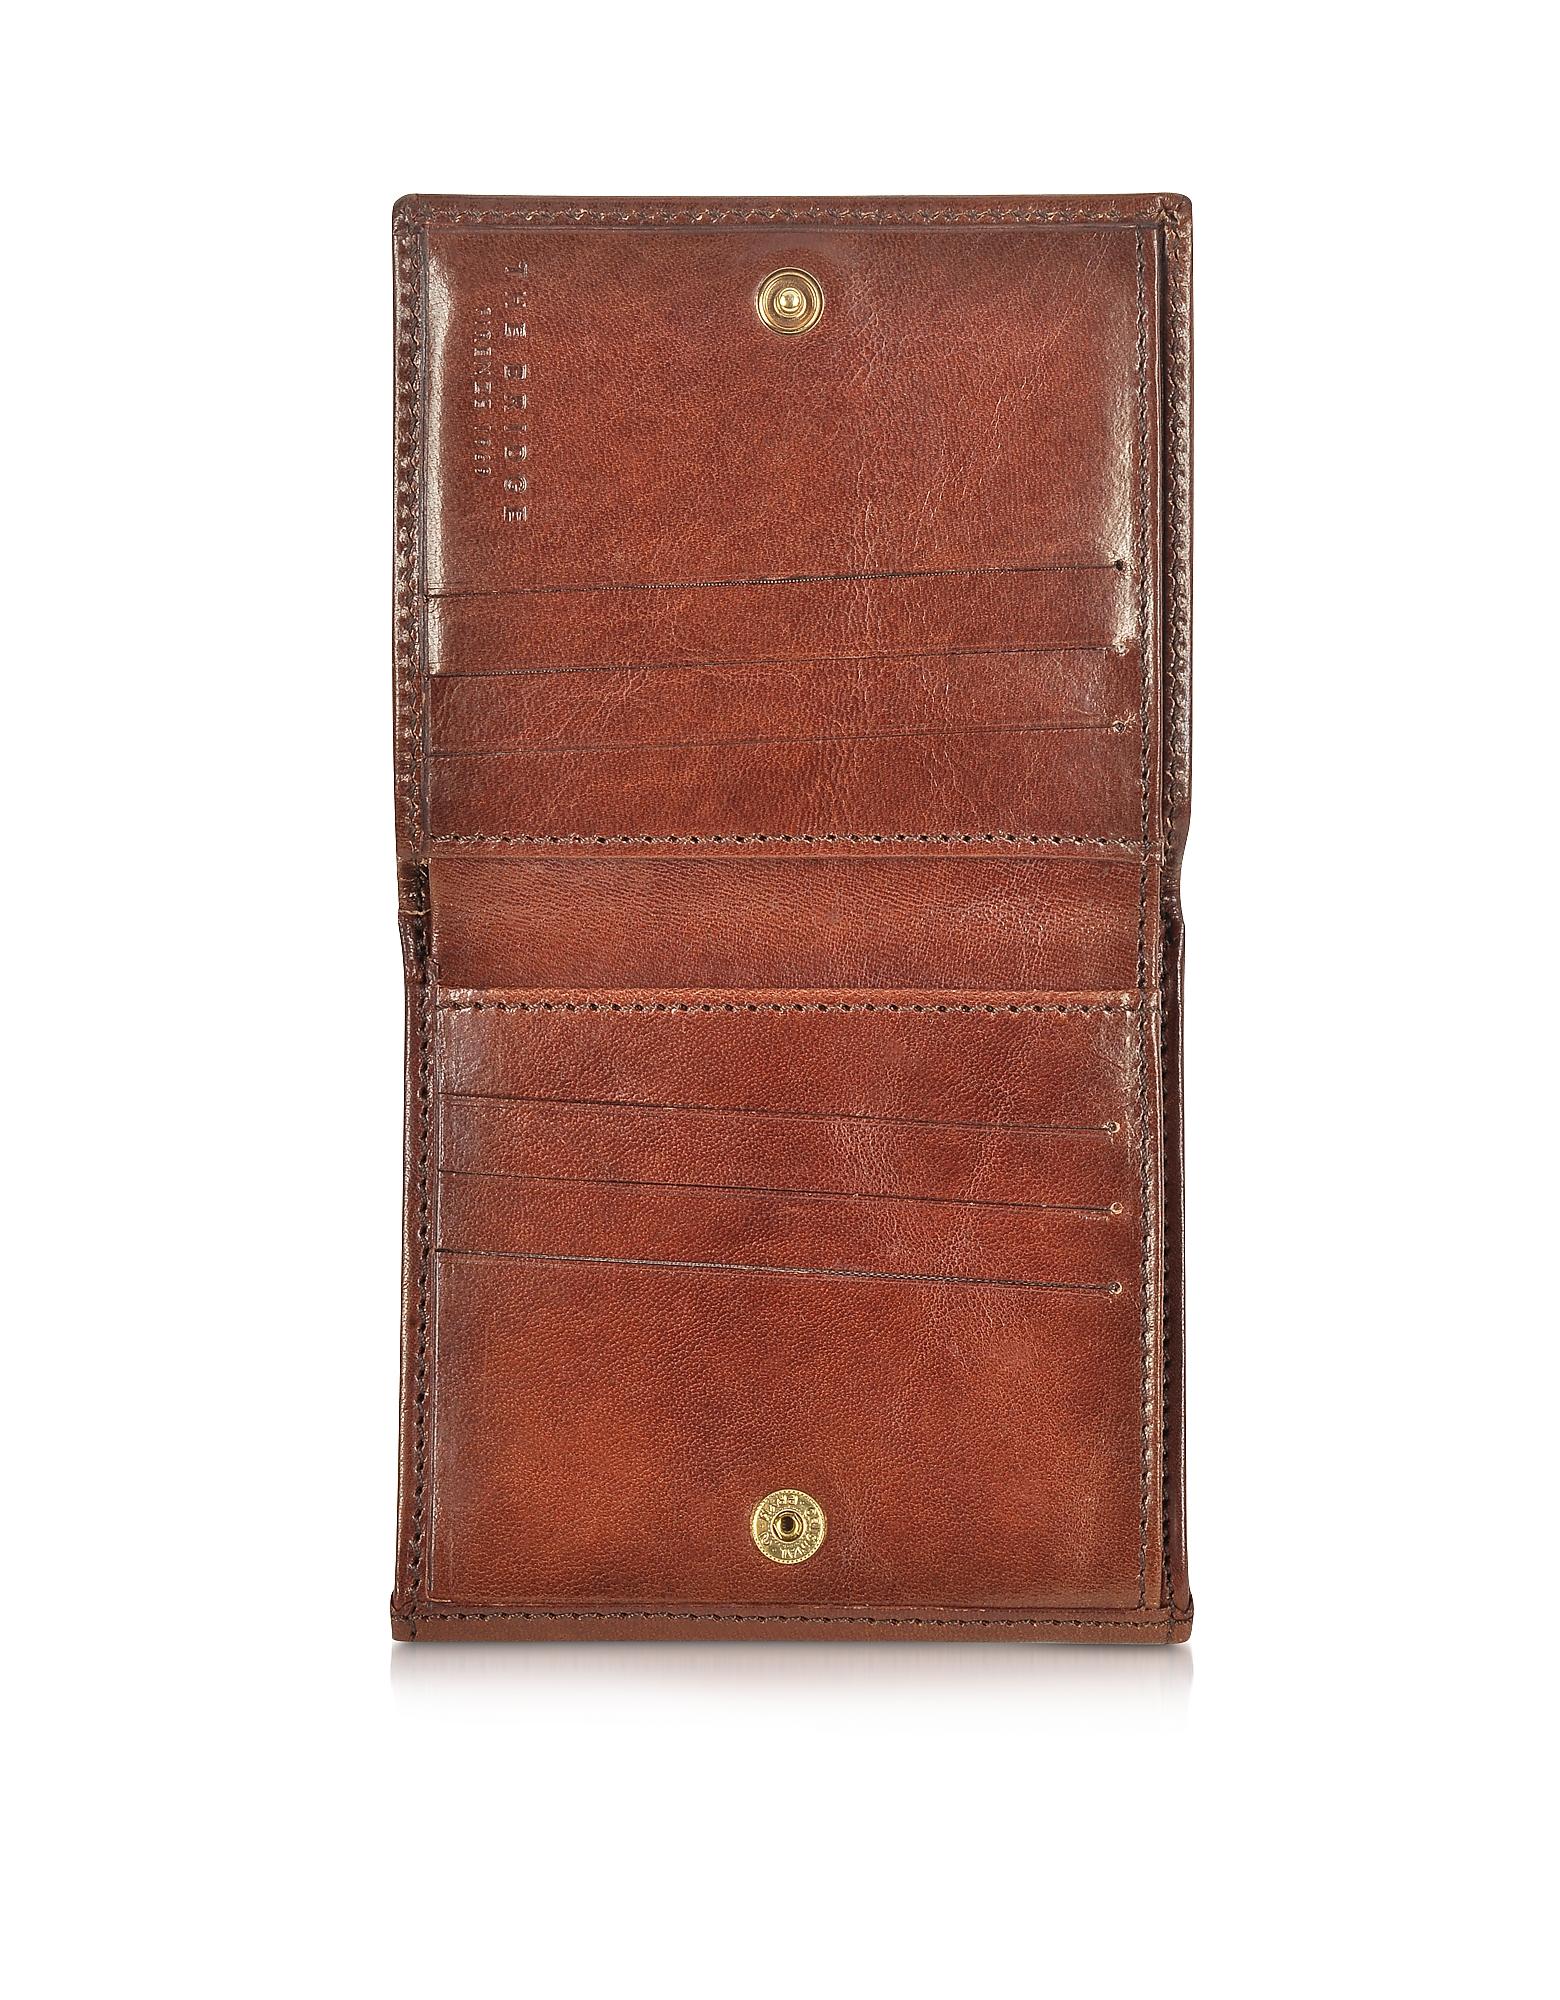 Lyst - The Bridge Dark Brown Leather Wallet W/coin Pocket in Brown